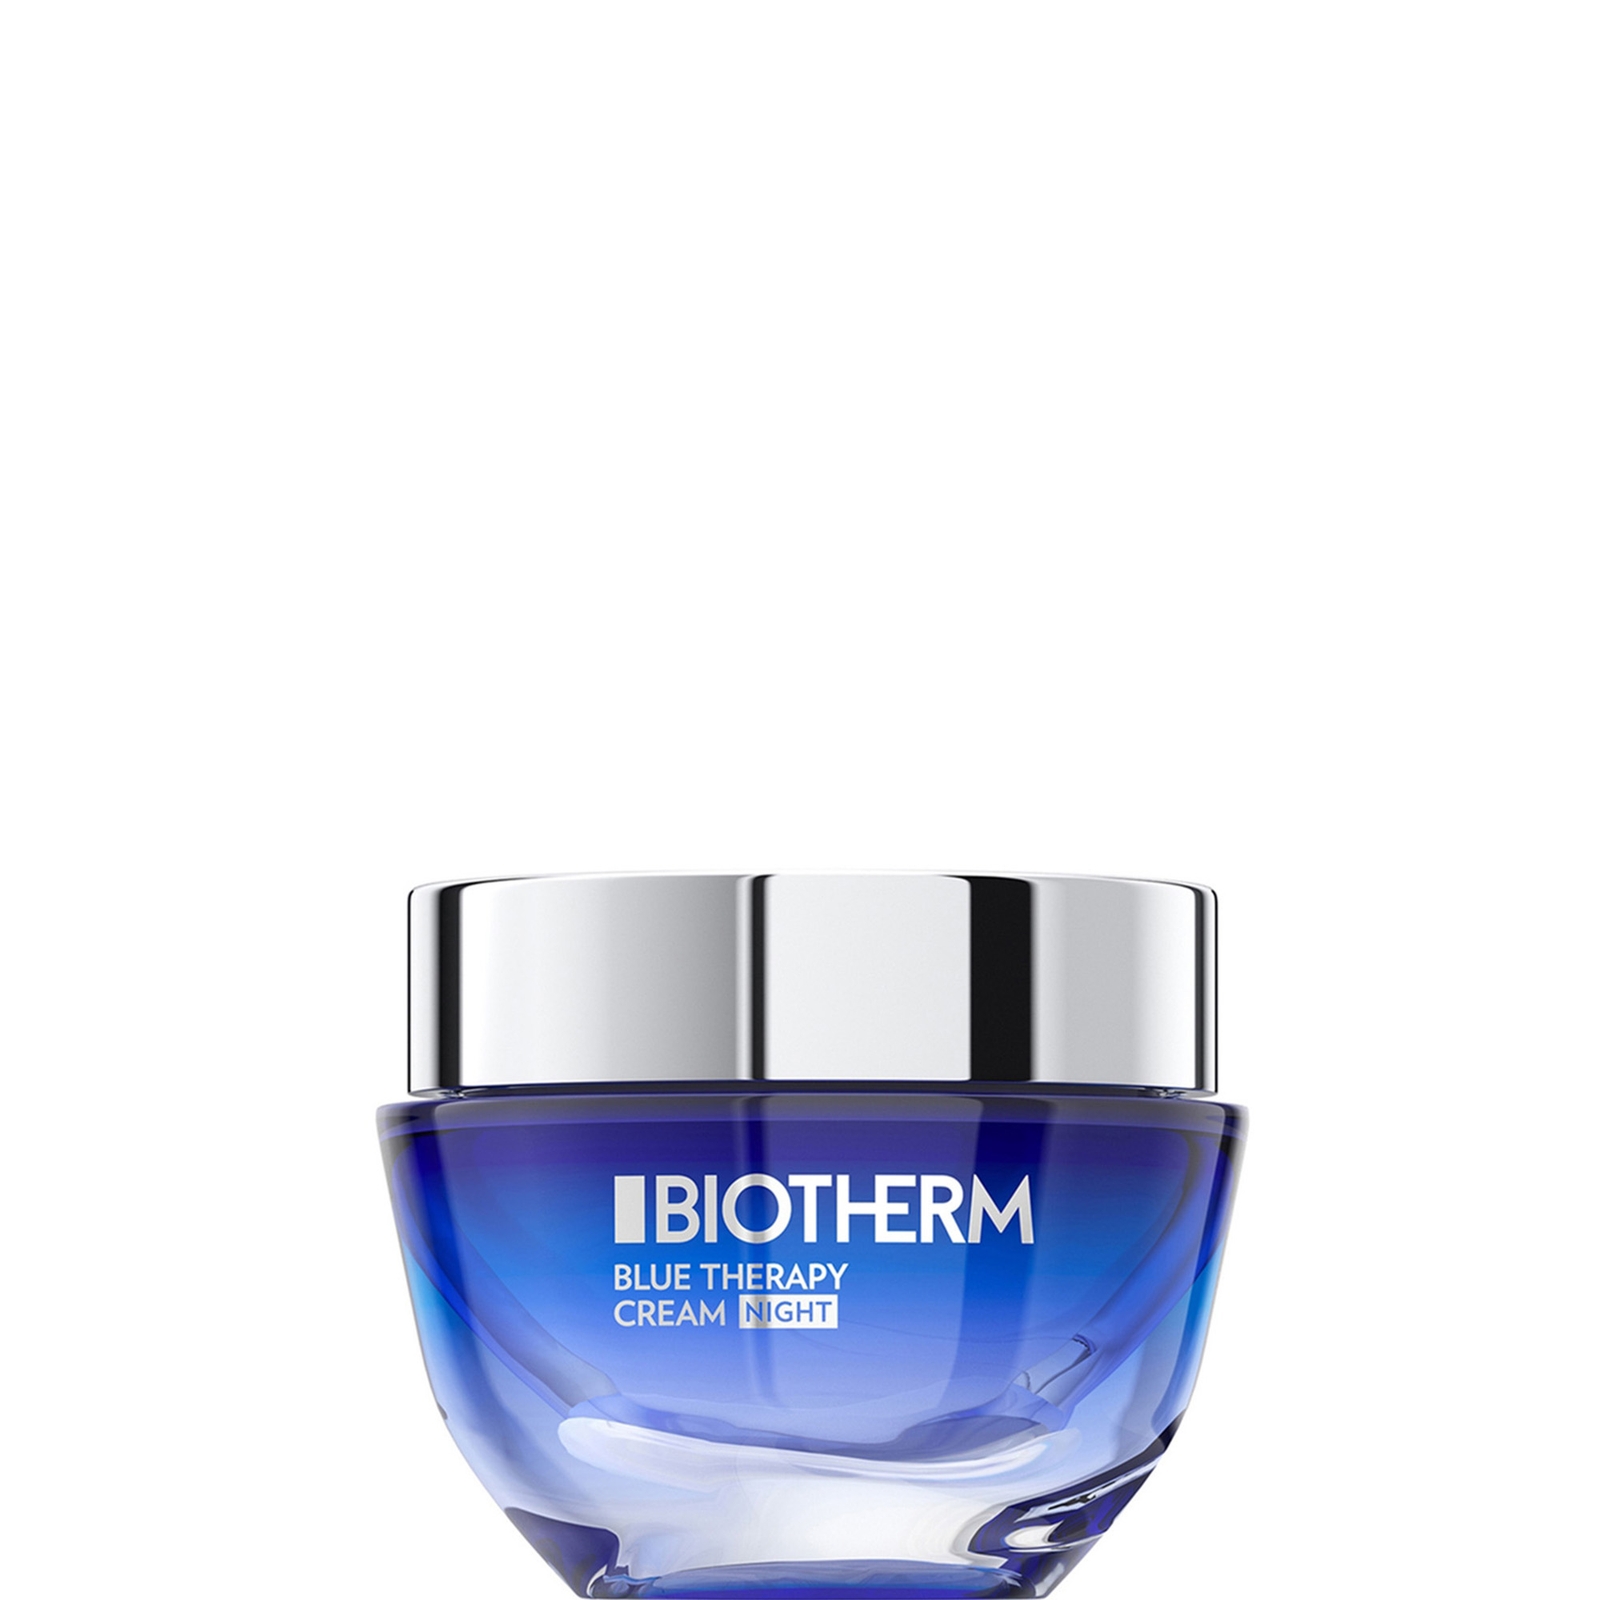 Photos - Cream / Lotion Biotherm Blue Therapy Night Cream 50ml L4778704 